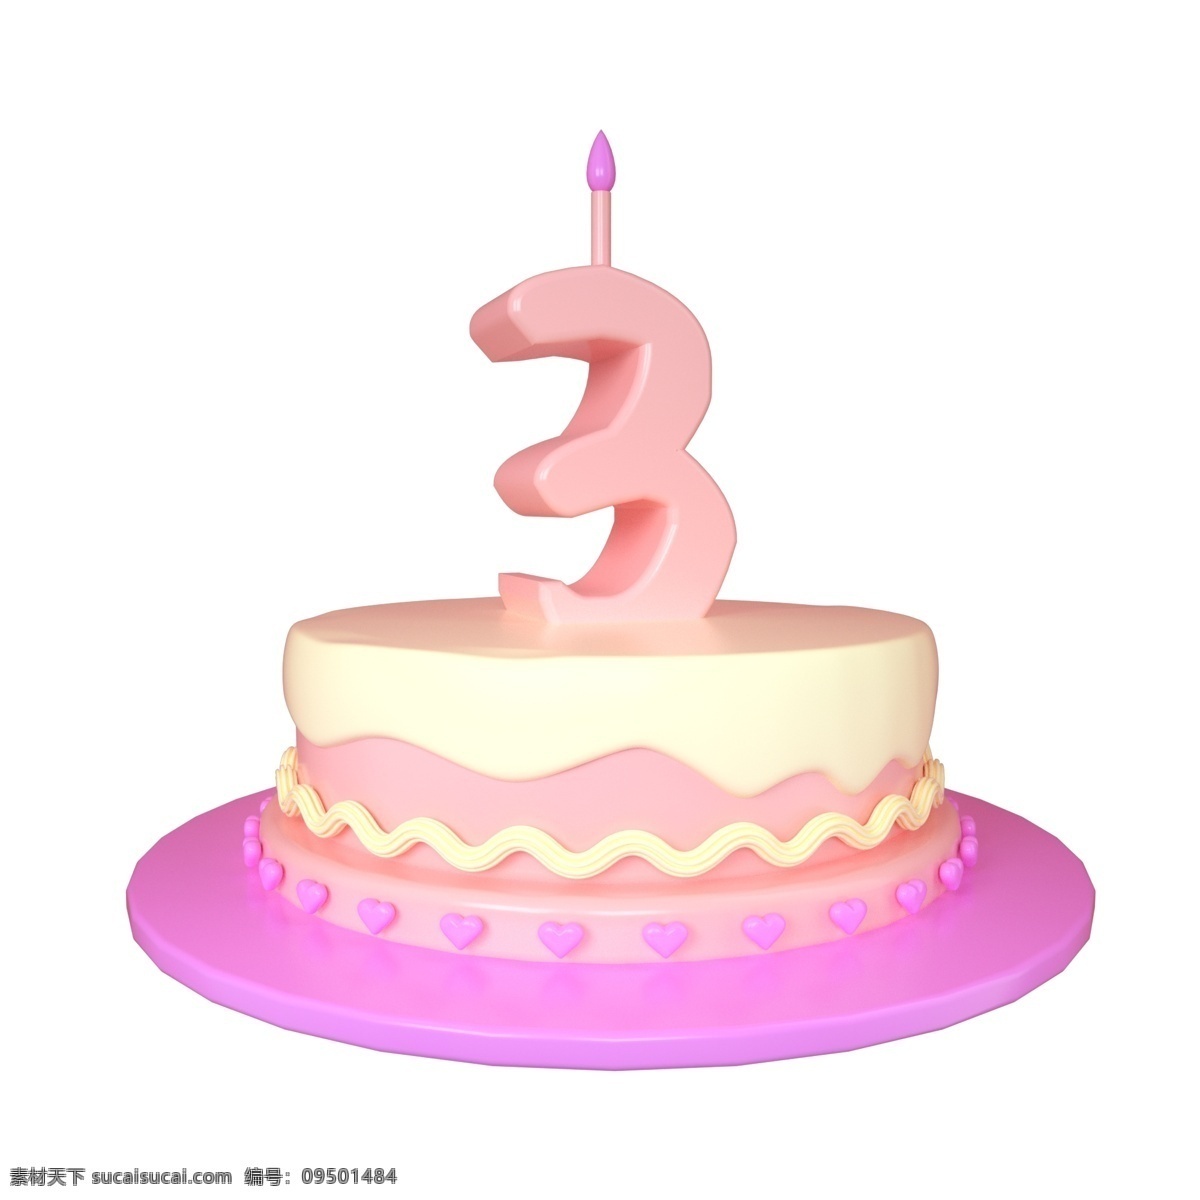 c4d 可爱 立体 周岁 生日蛋糕 装饰 3d 3周岁 粉色 奶黄色 紫色 爱心 庆祝生日 蜡烛